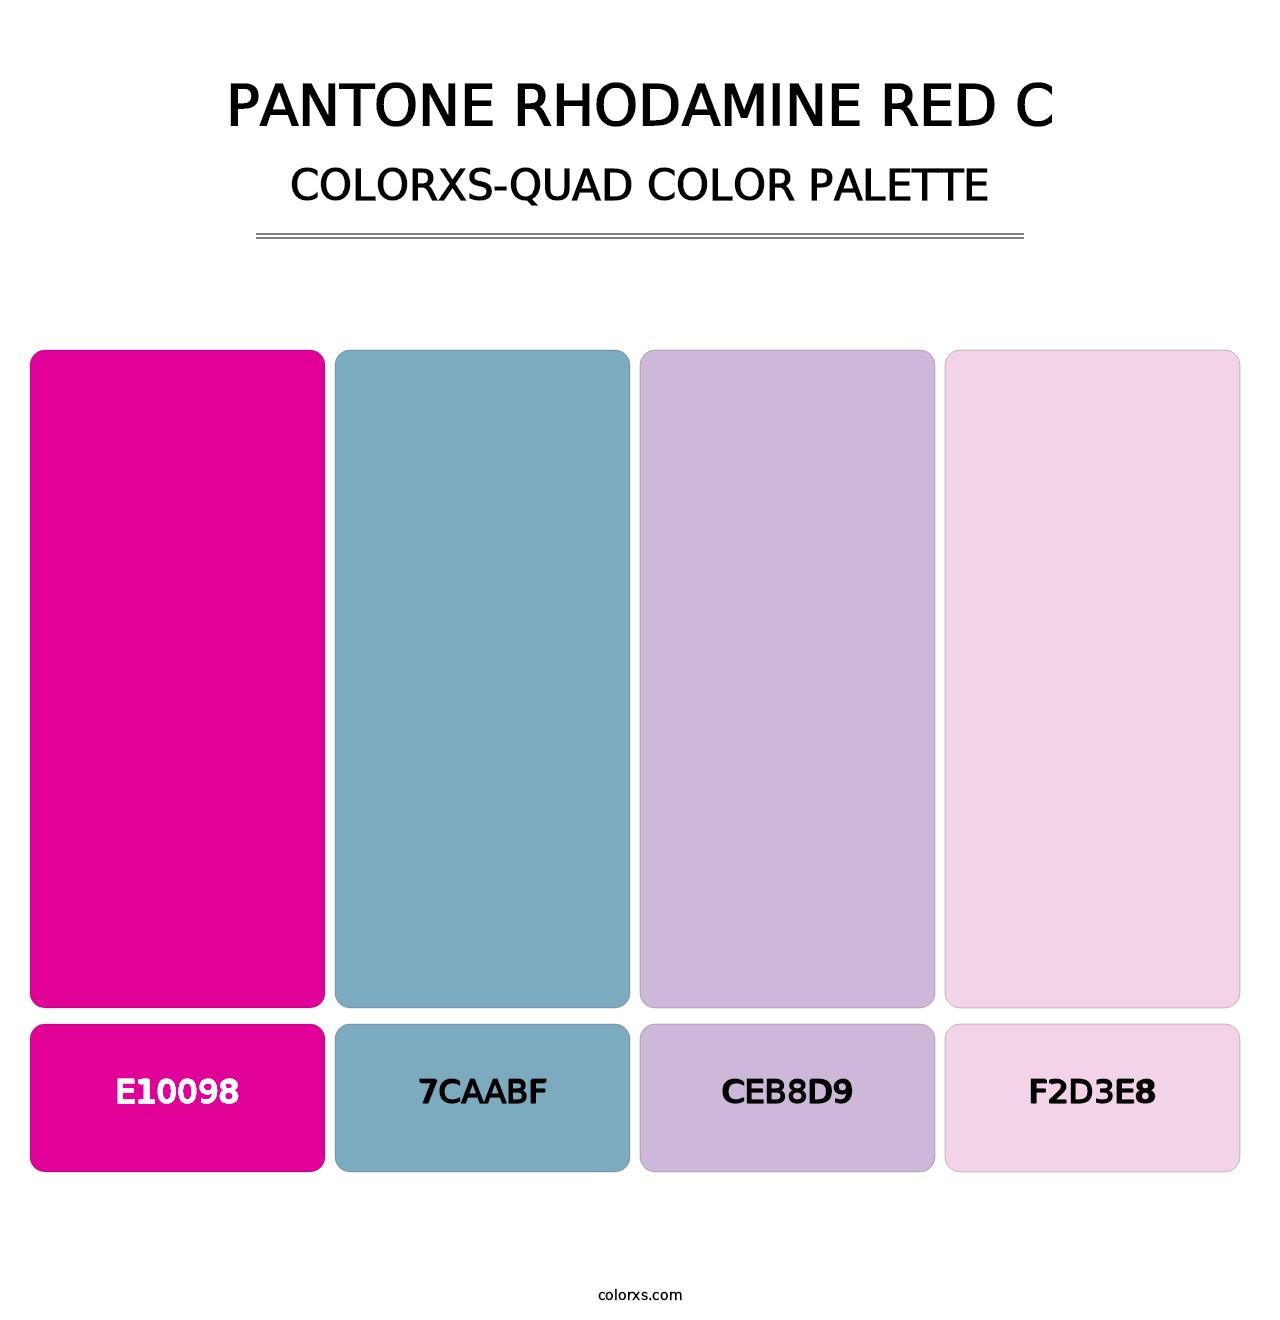 PANTONE Rhodamine Red C - Colorxs Quad Palette